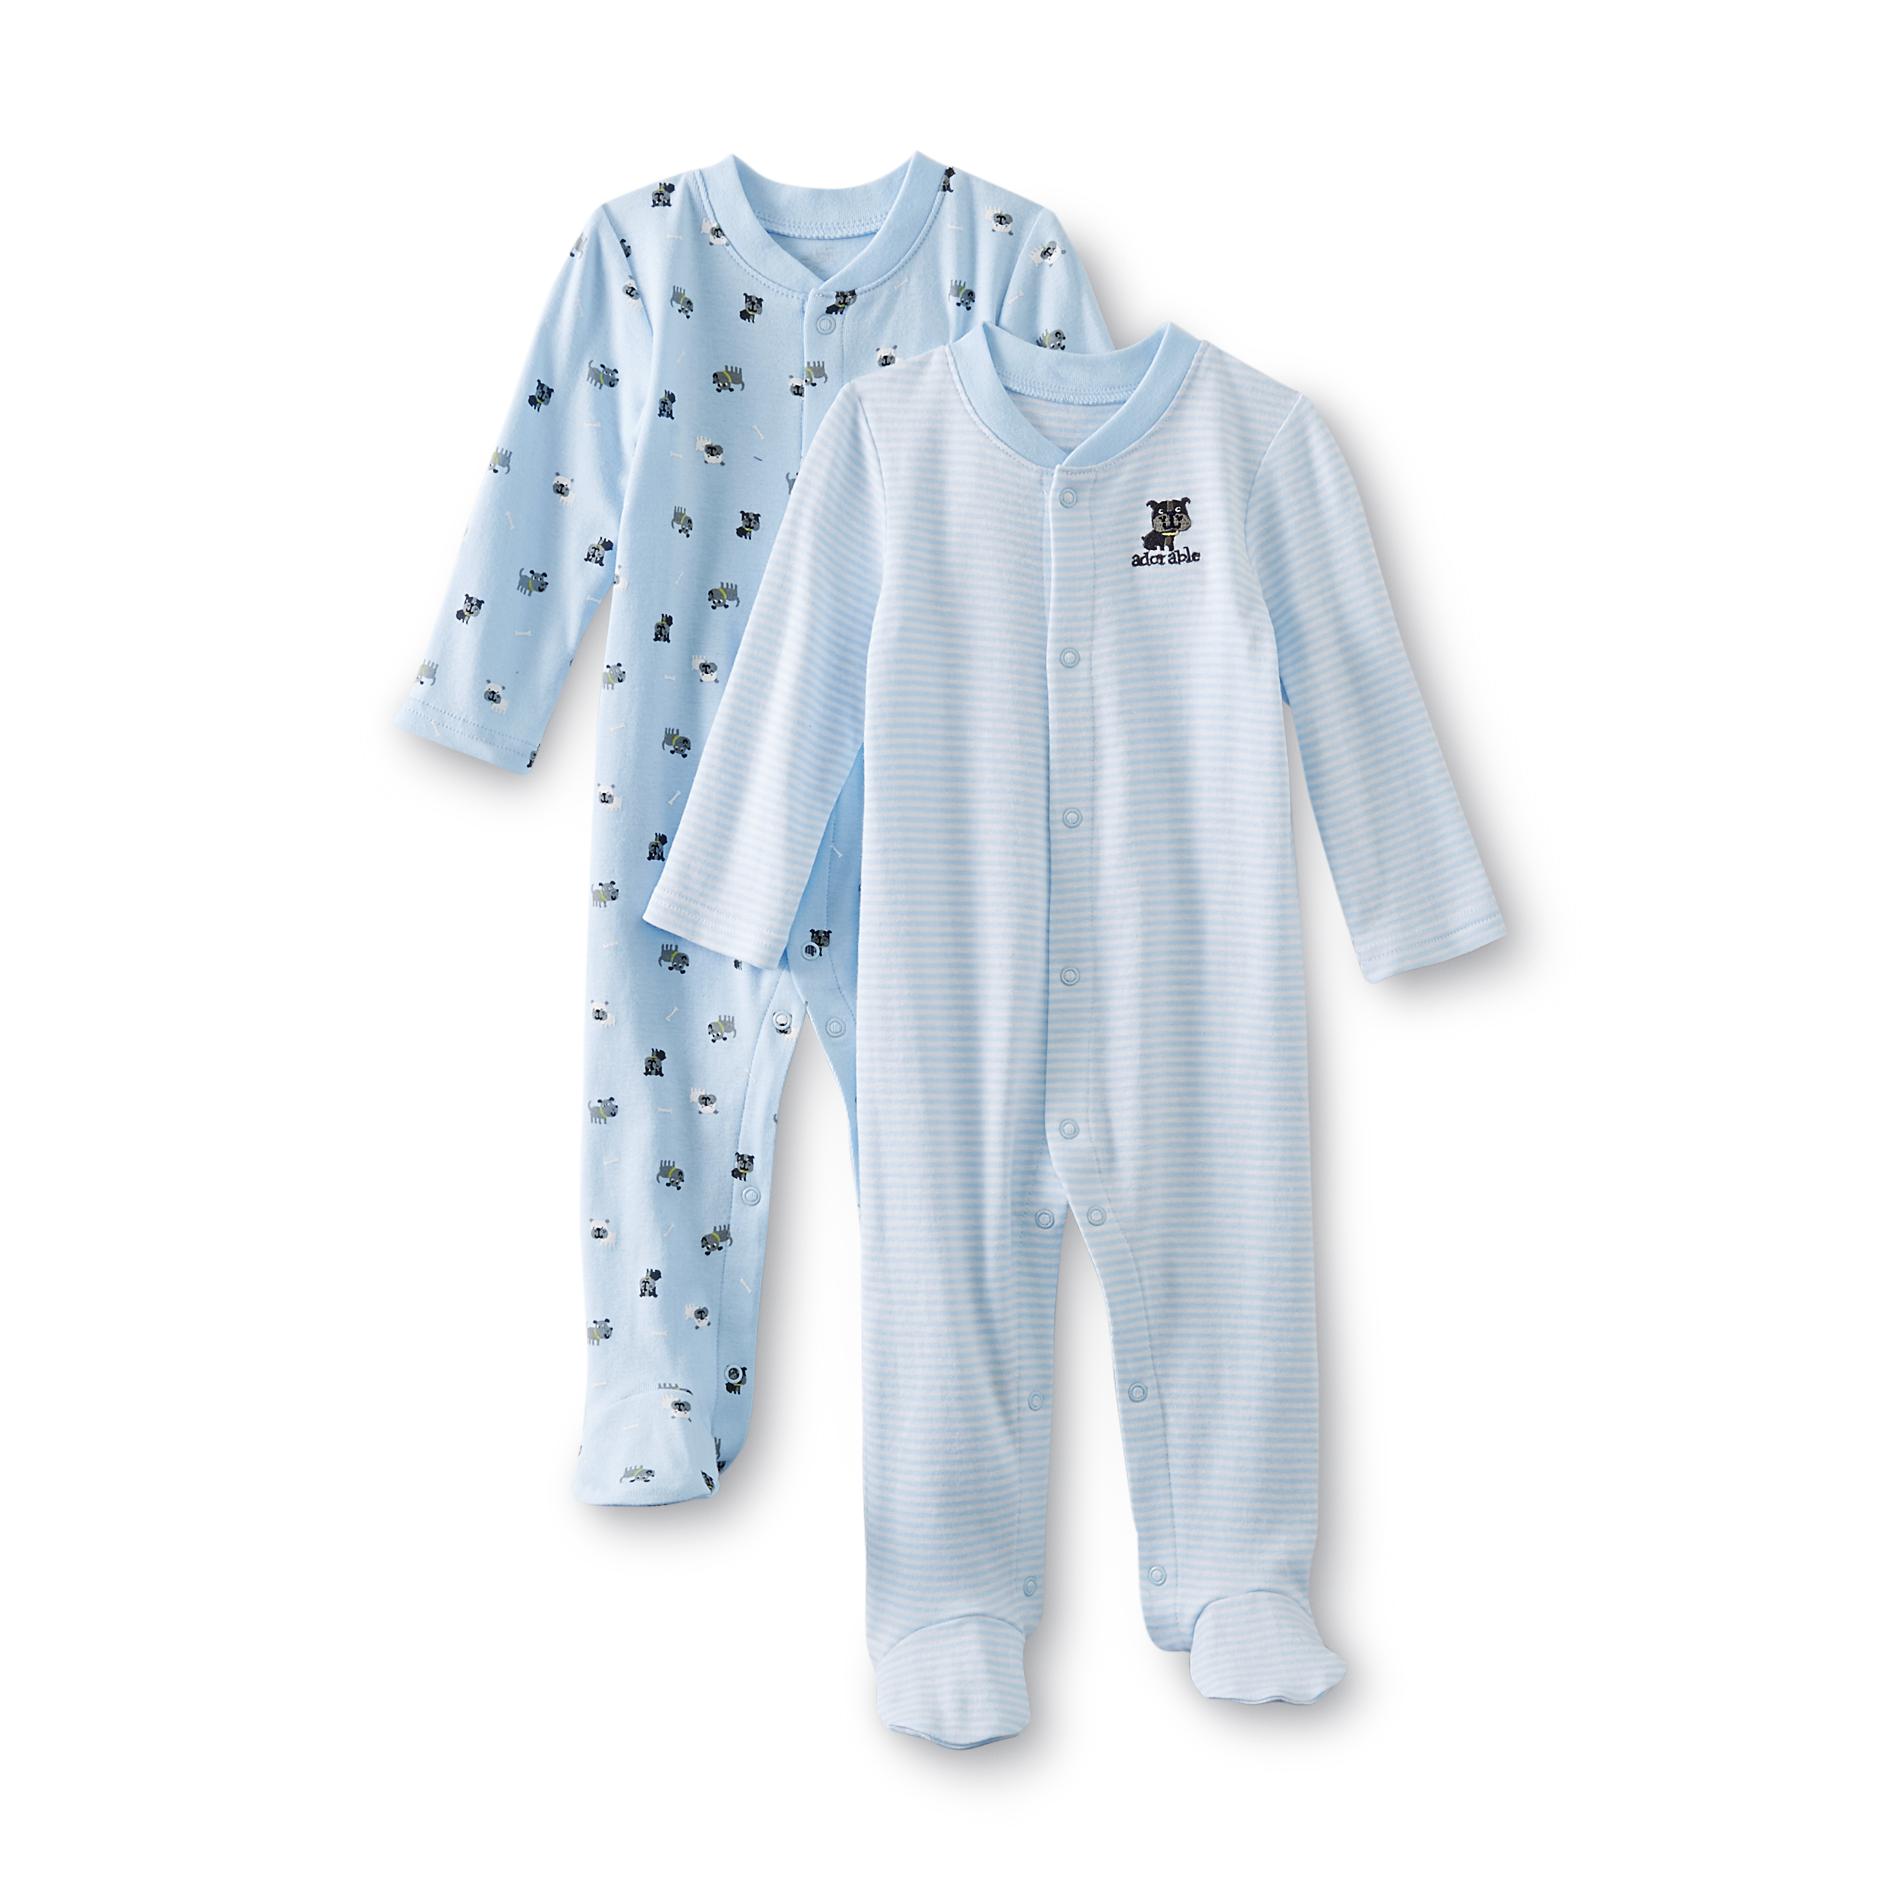 Small Wonders Newborn Boy's 2-Pack Footed Sleeper Pajamas - Dog